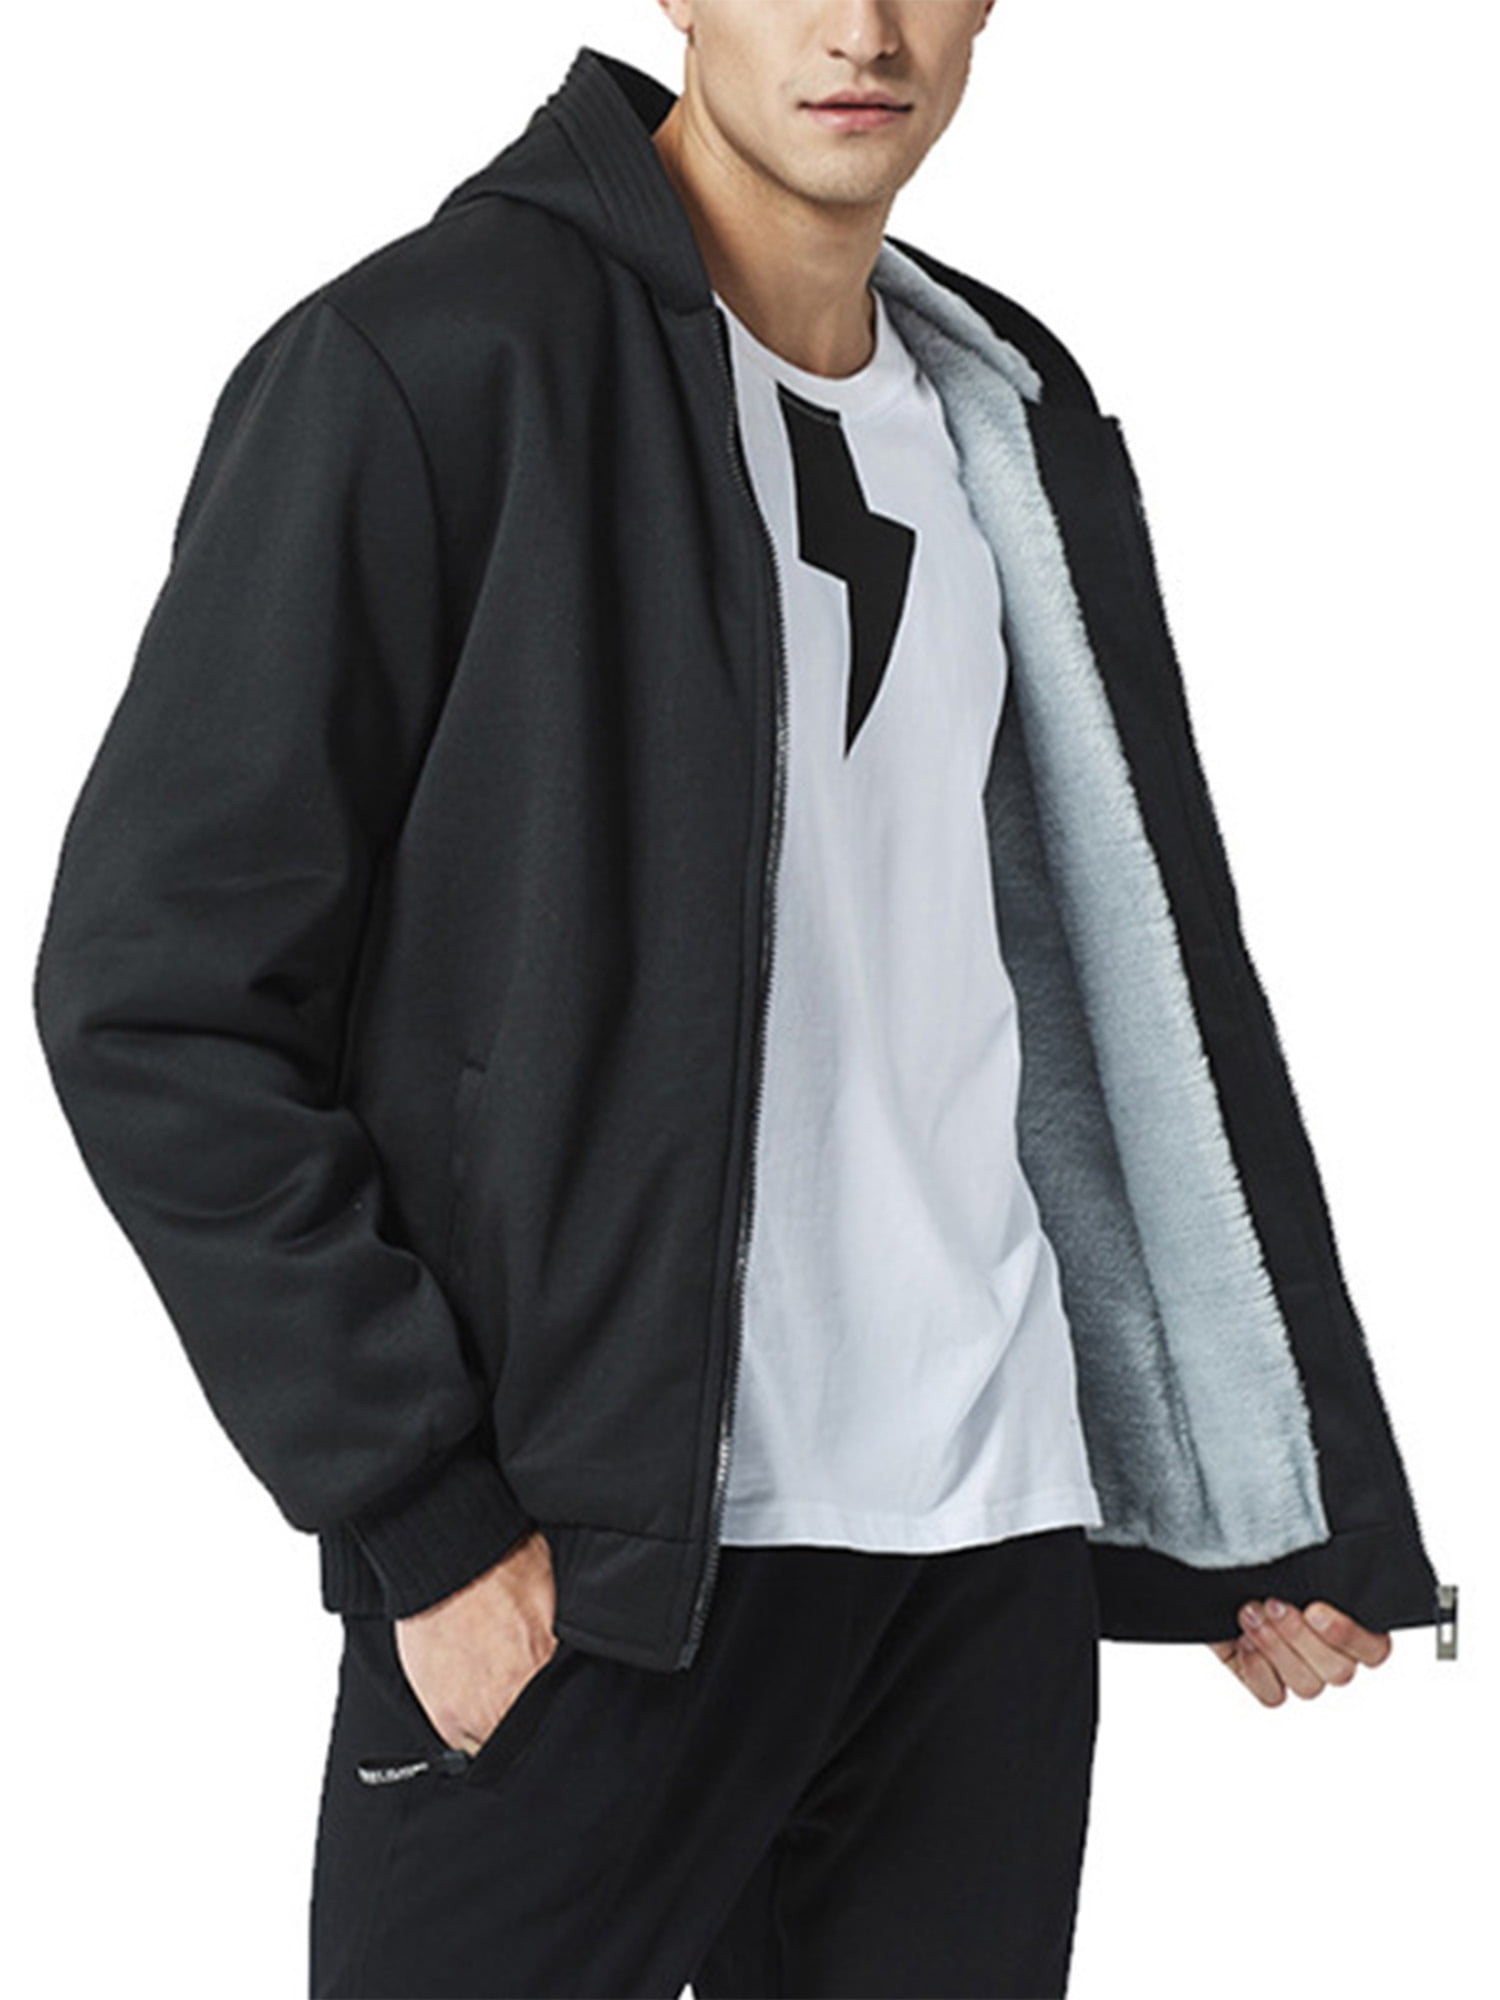 Plus Size S-5XL Marled Heavyweight Fleece Hoodie for Men Sherpa Lined Full Zip Up Long Sleeve Winter Jacket Coat